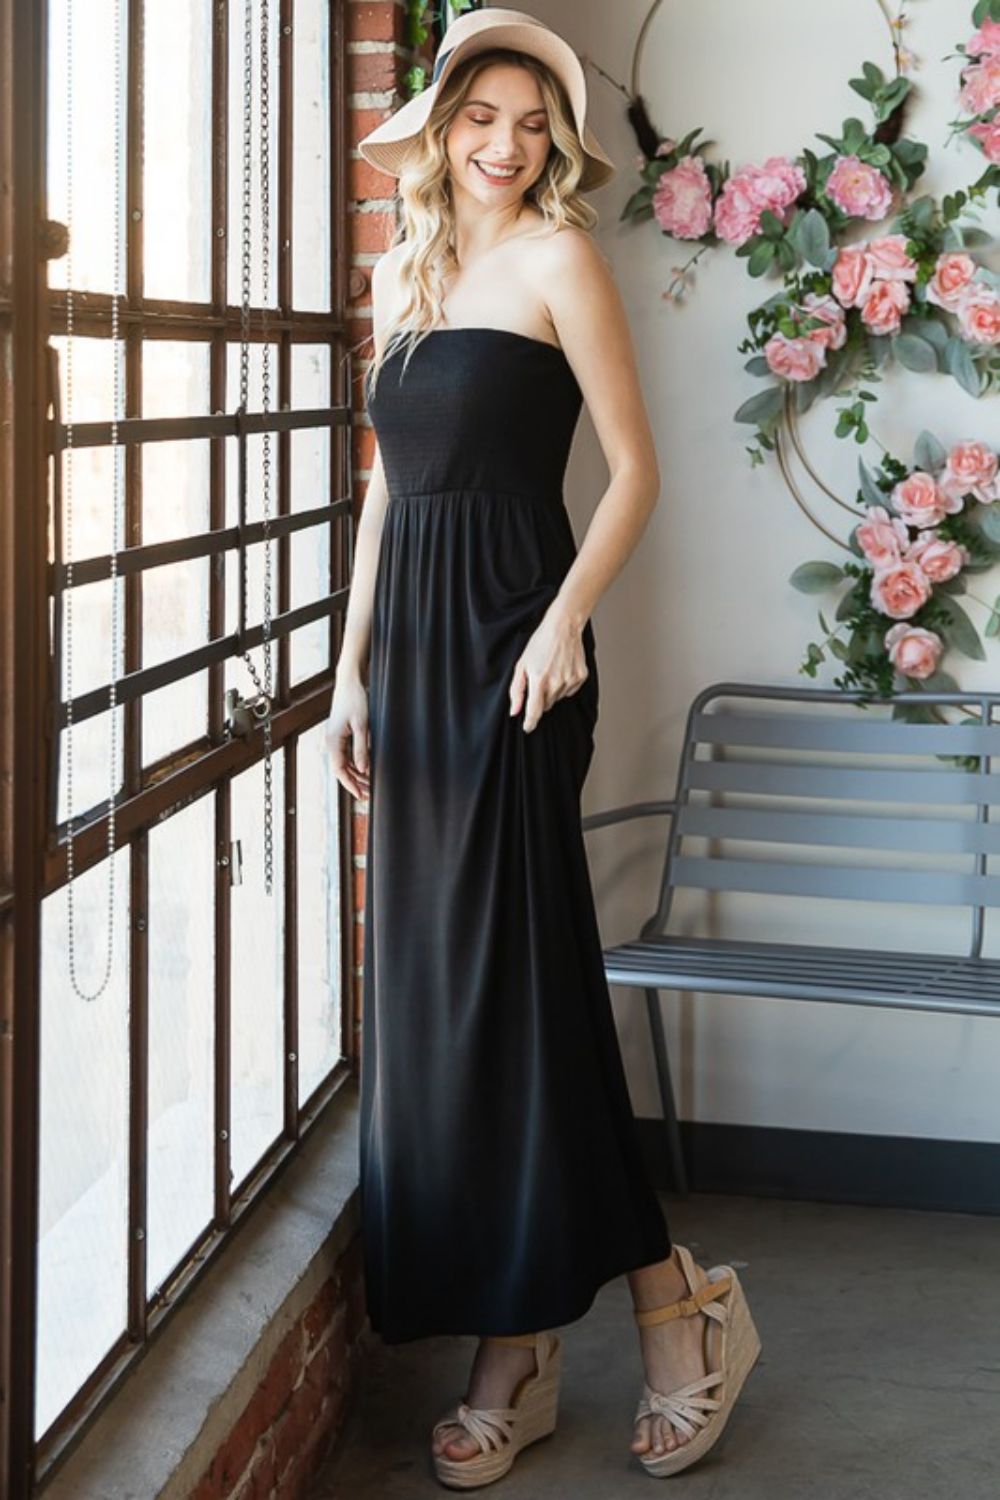 Heimish Full Size Strapless Maxi Dress  | KIKI COUTURE-Women's Clothing, Designer Fashions, Shoes, Bags